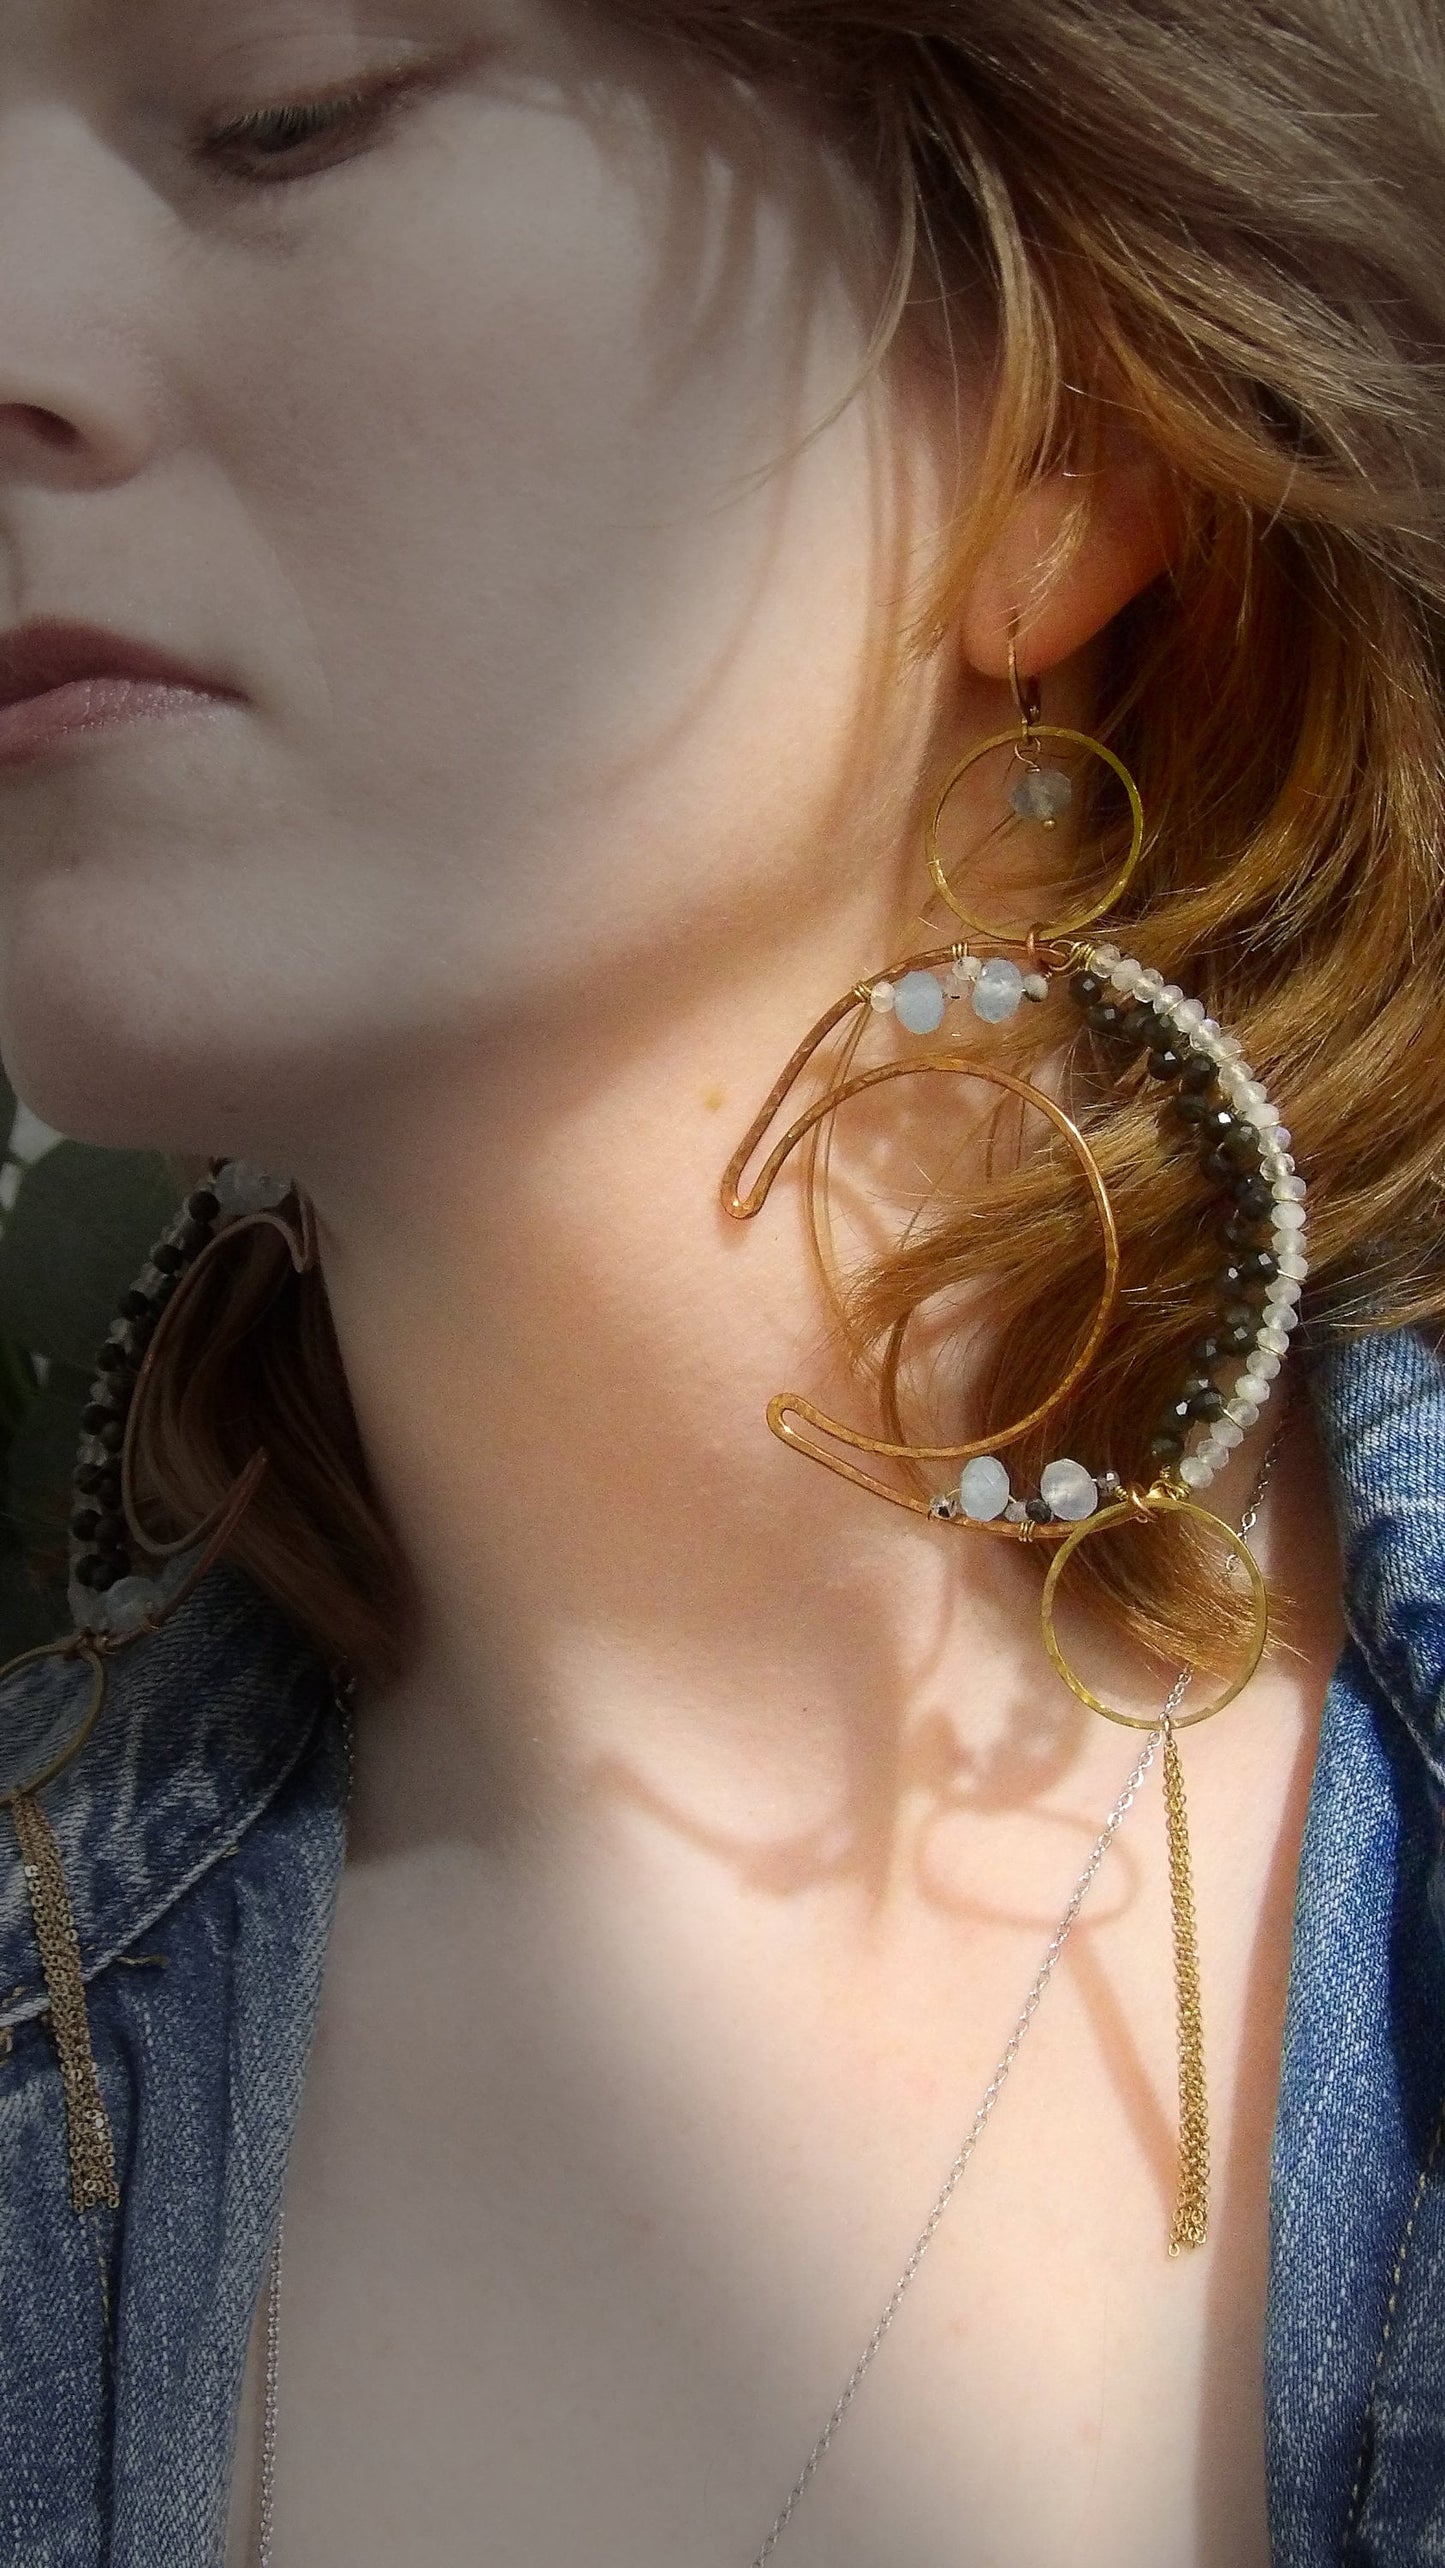 big crescent moon earrings - moon phase earrings - hammered copper earrings - boho earrings - bohemian earrings - sustainable jewelry - aquamarine earrings - obsidian earrings - moonstone earrings